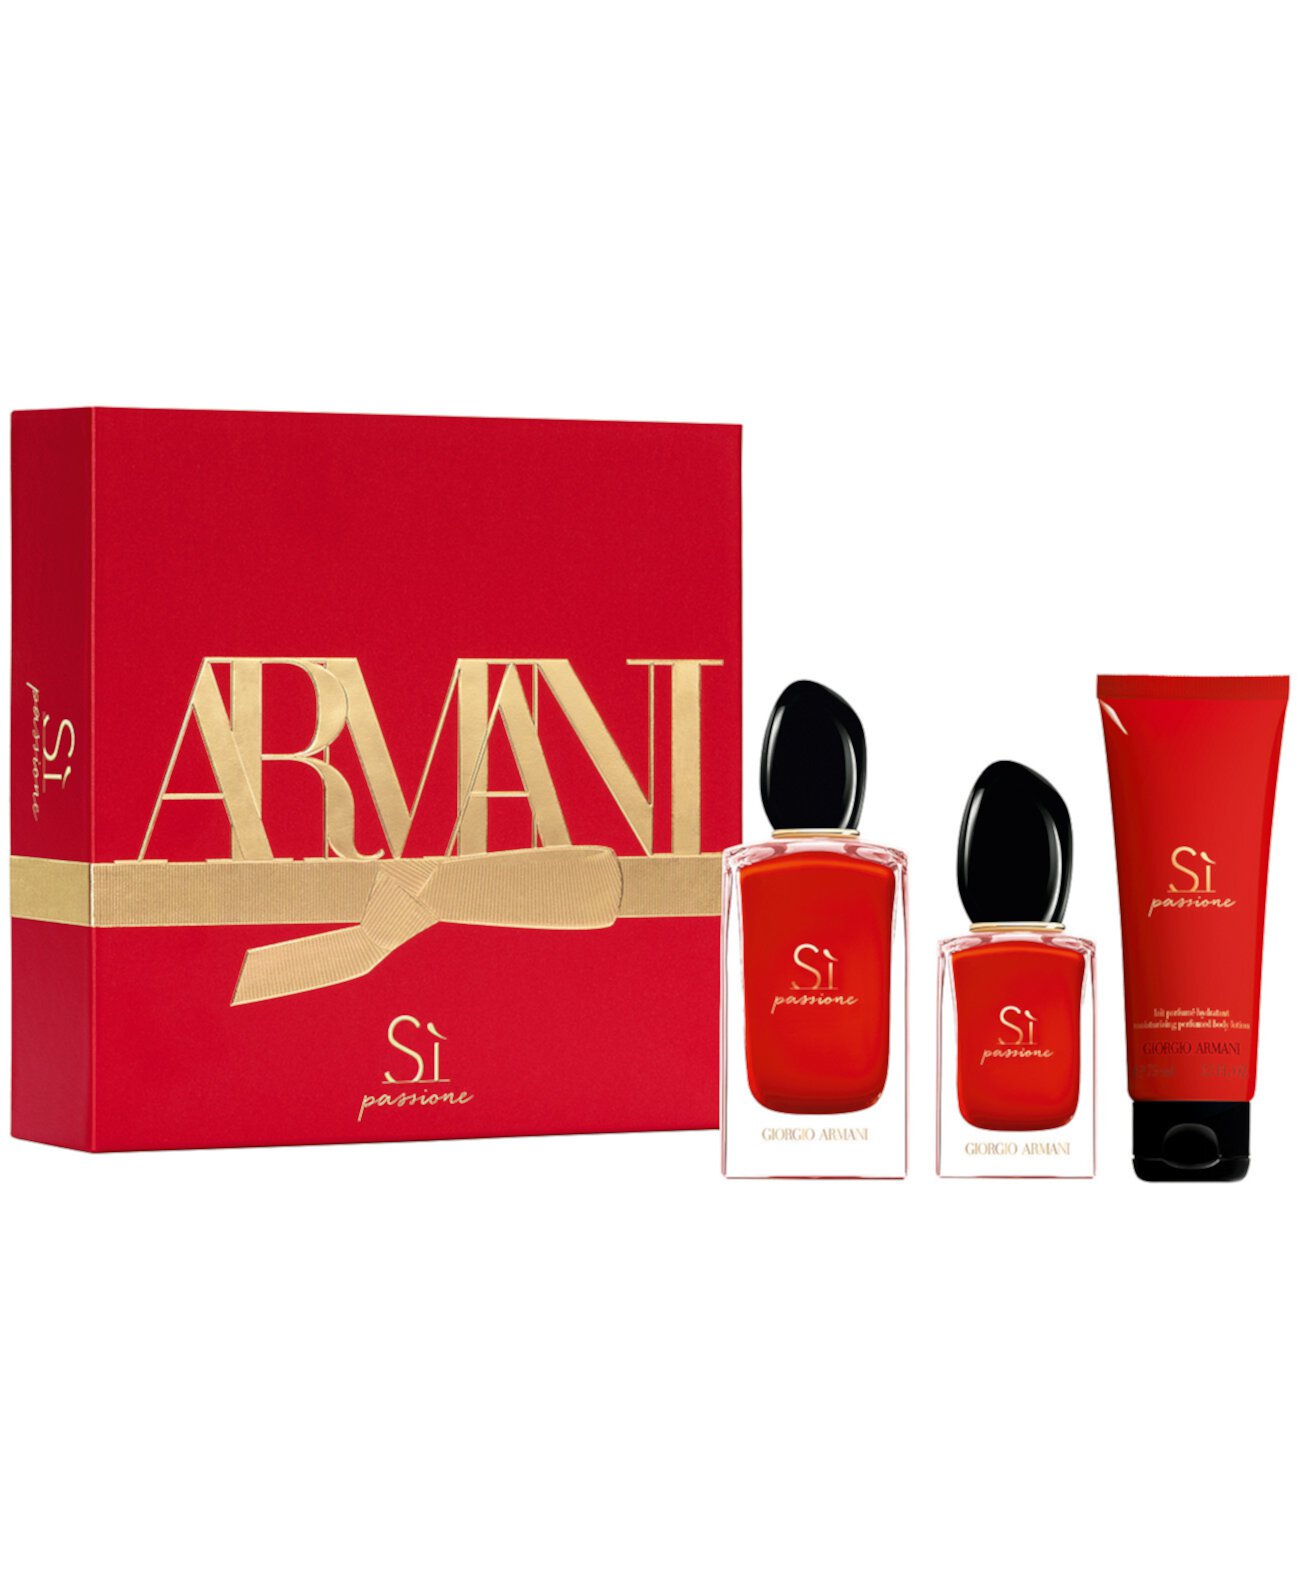 3-шт. Подарочный набор Sì Passione Eau de Parfum Giorgio Armani